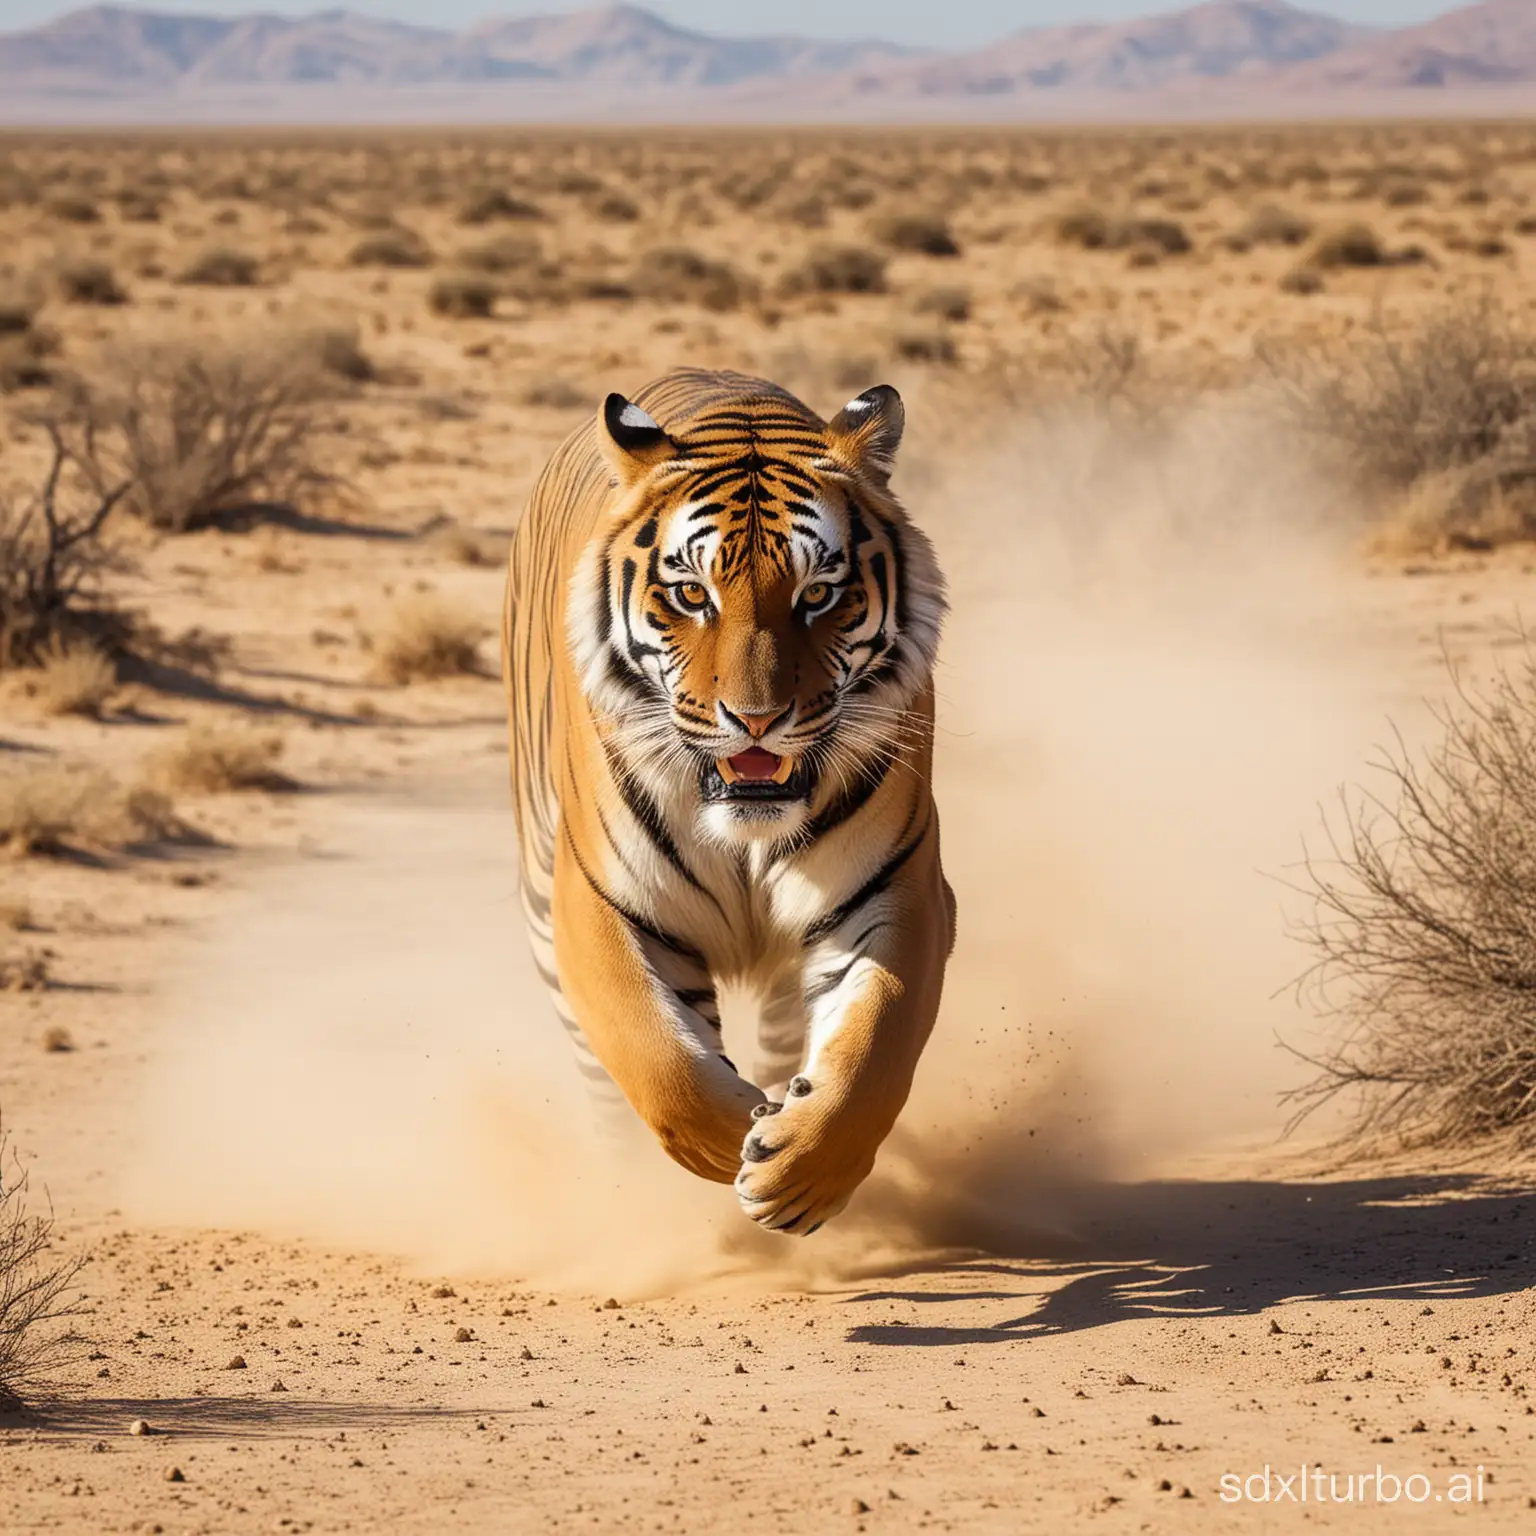 A tiger running in the desert